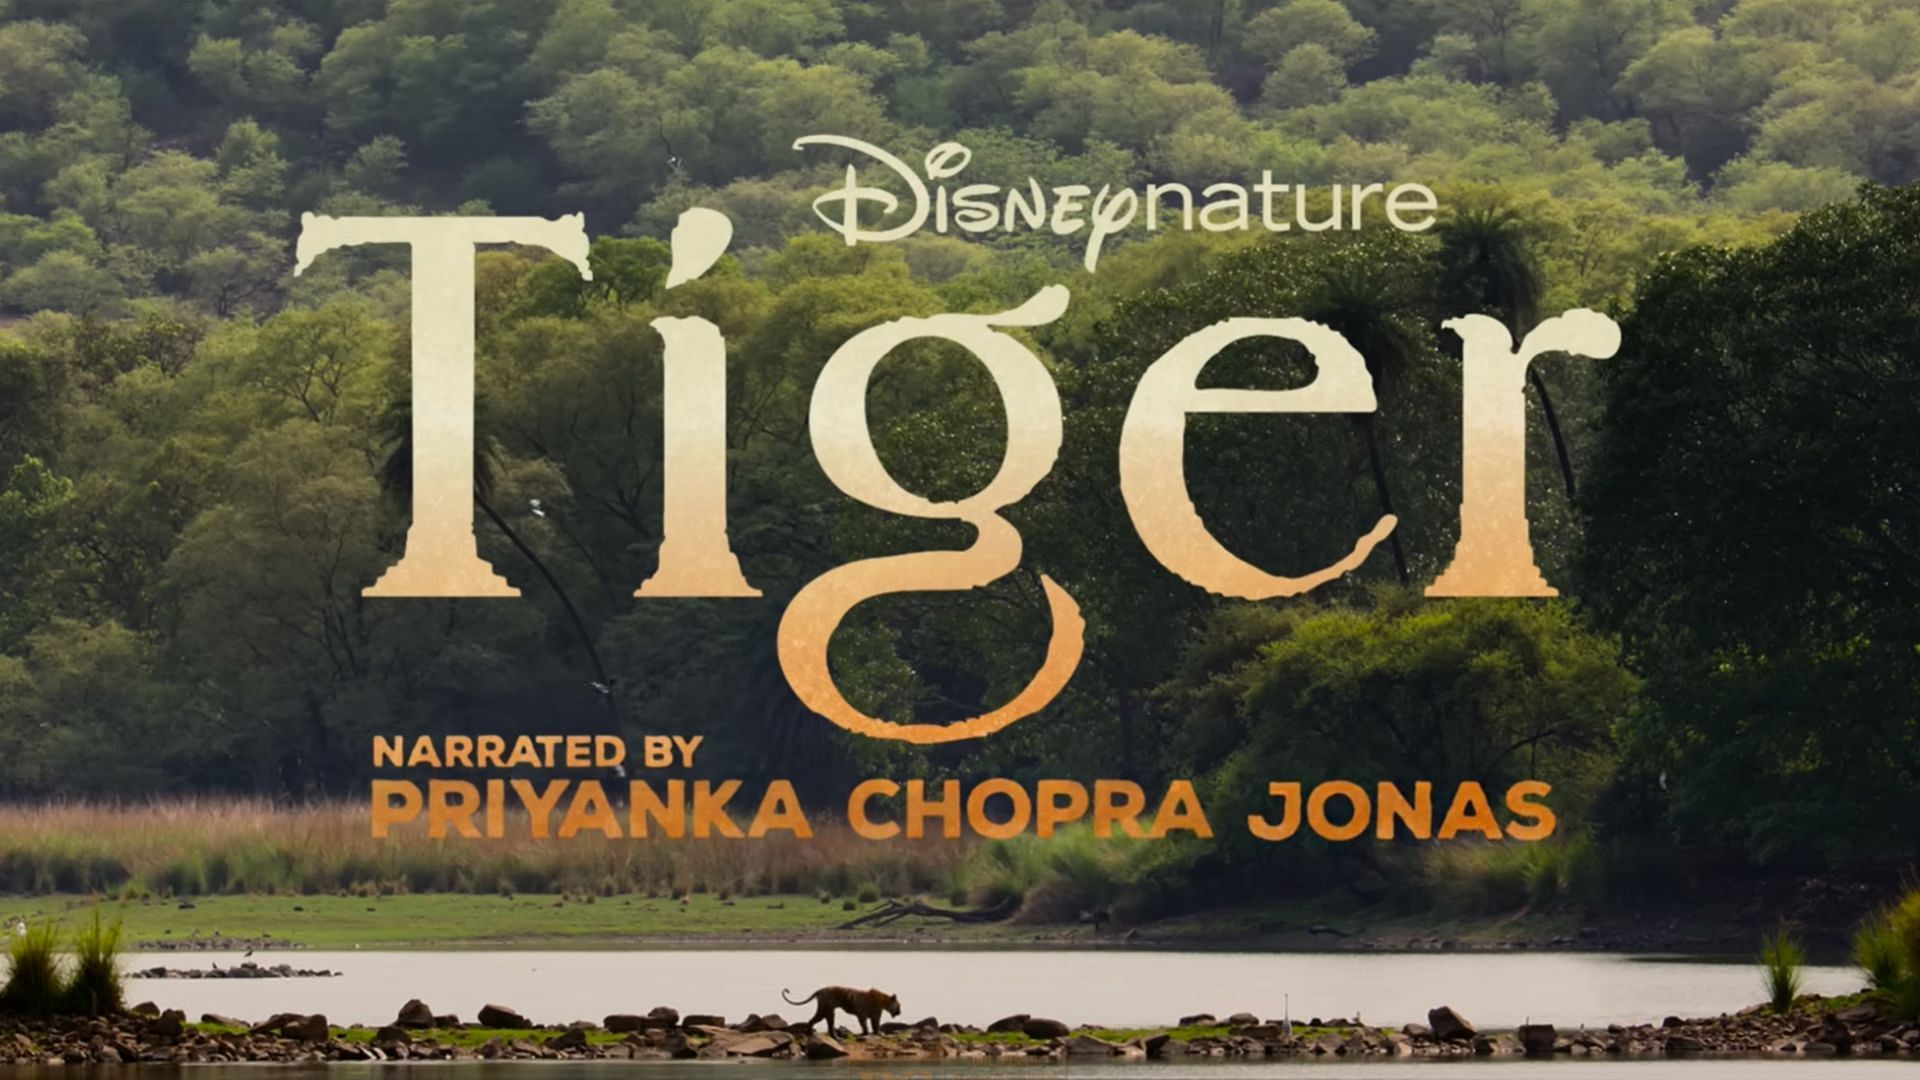 The documentary follows a young tigress Ambar (Image via YouTube@Disney)